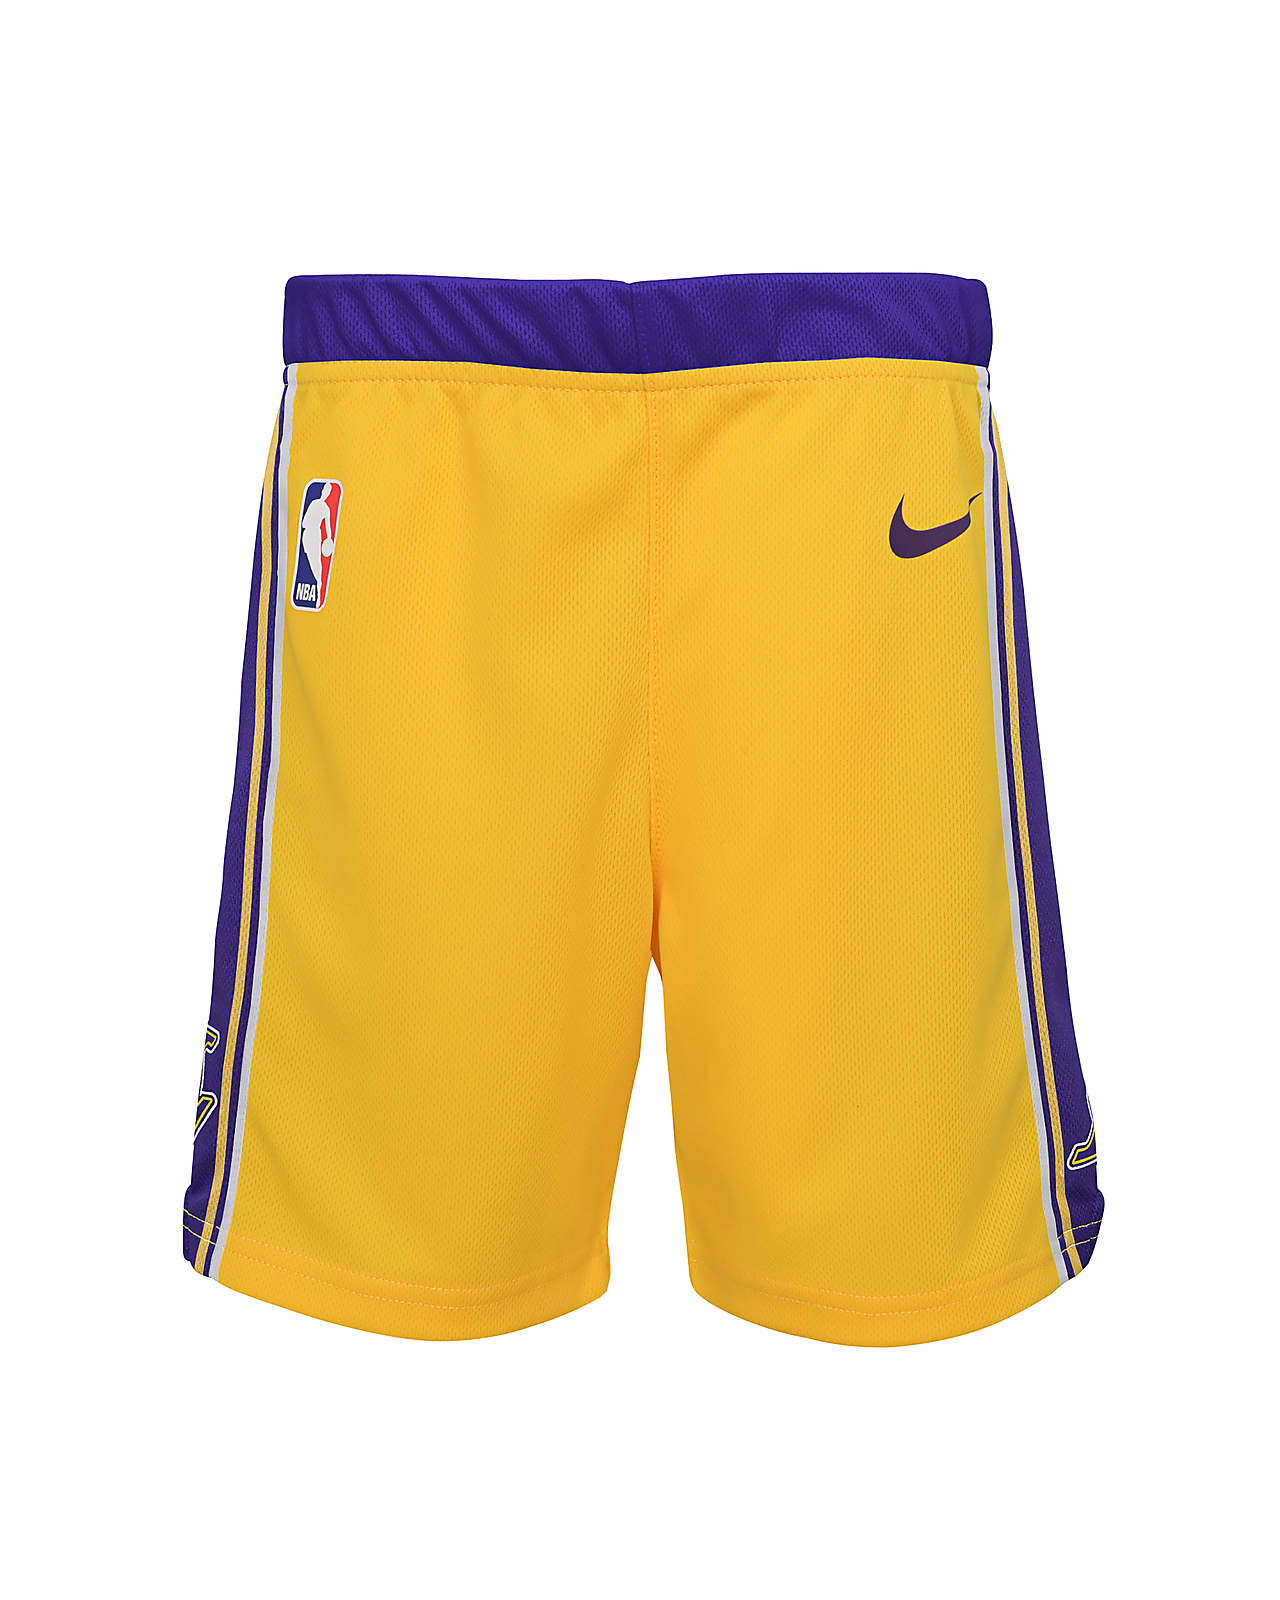 LeBron James wants to wear short shorts  Lebron james basketball, Lebron  james, Basketball shorts